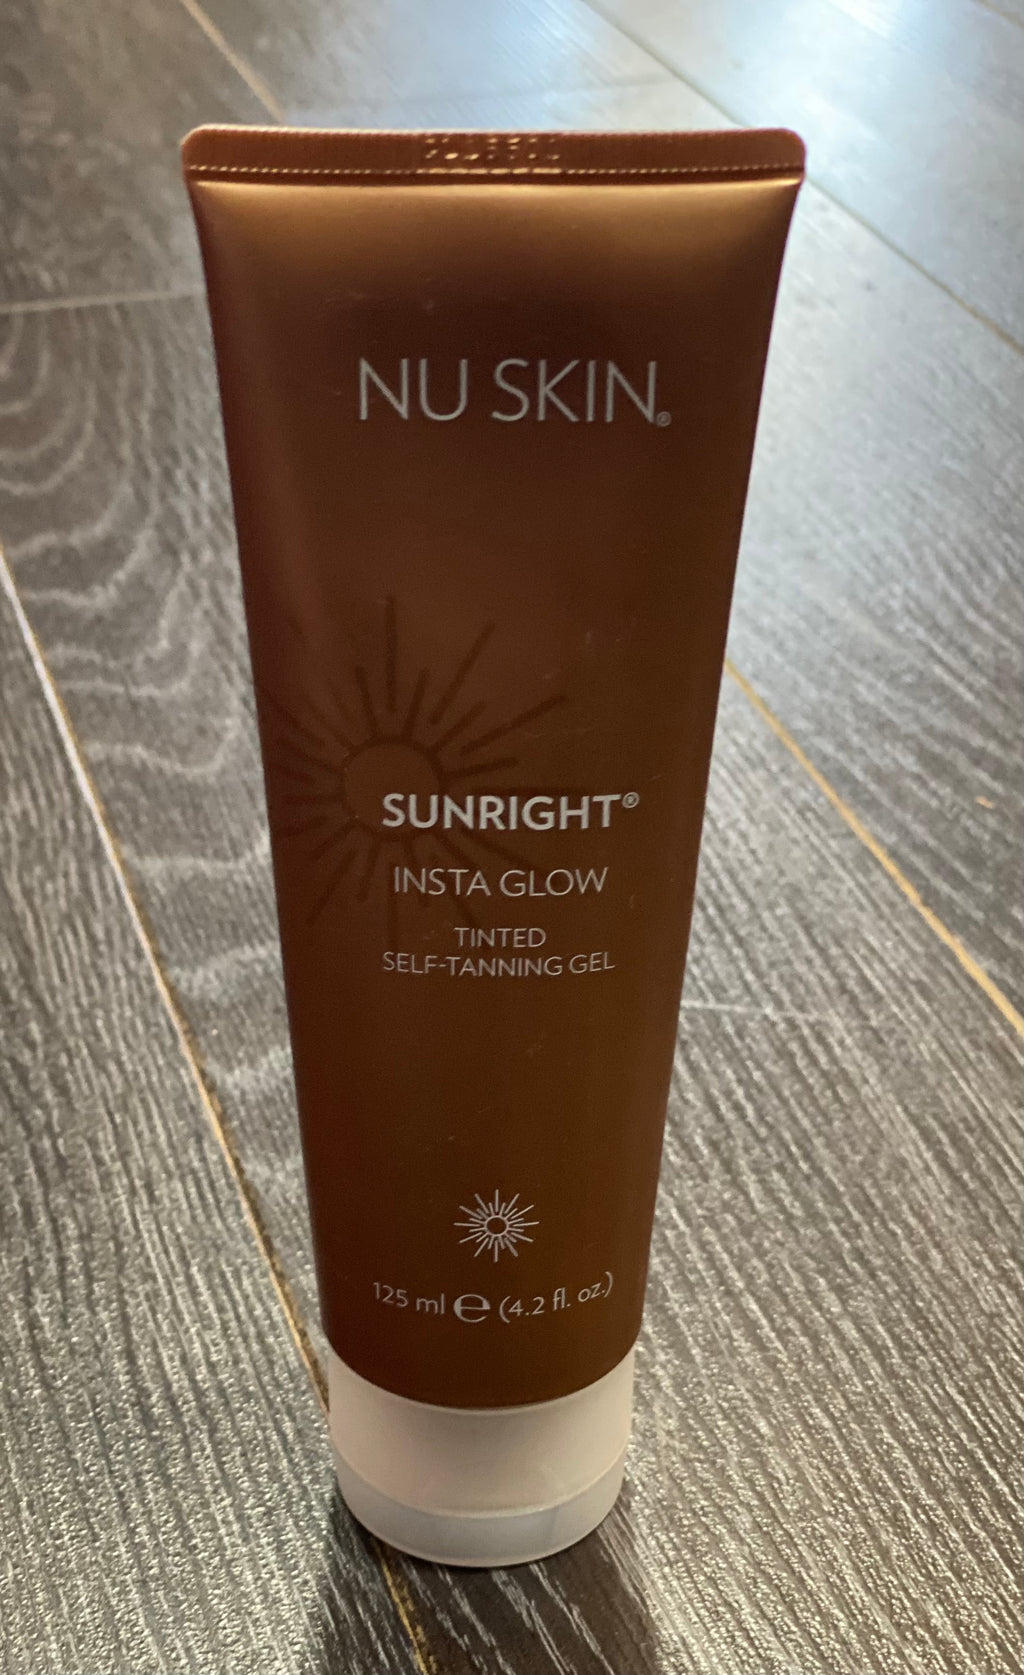 Nu Skin sunright insta glow tinted self-tanning gel